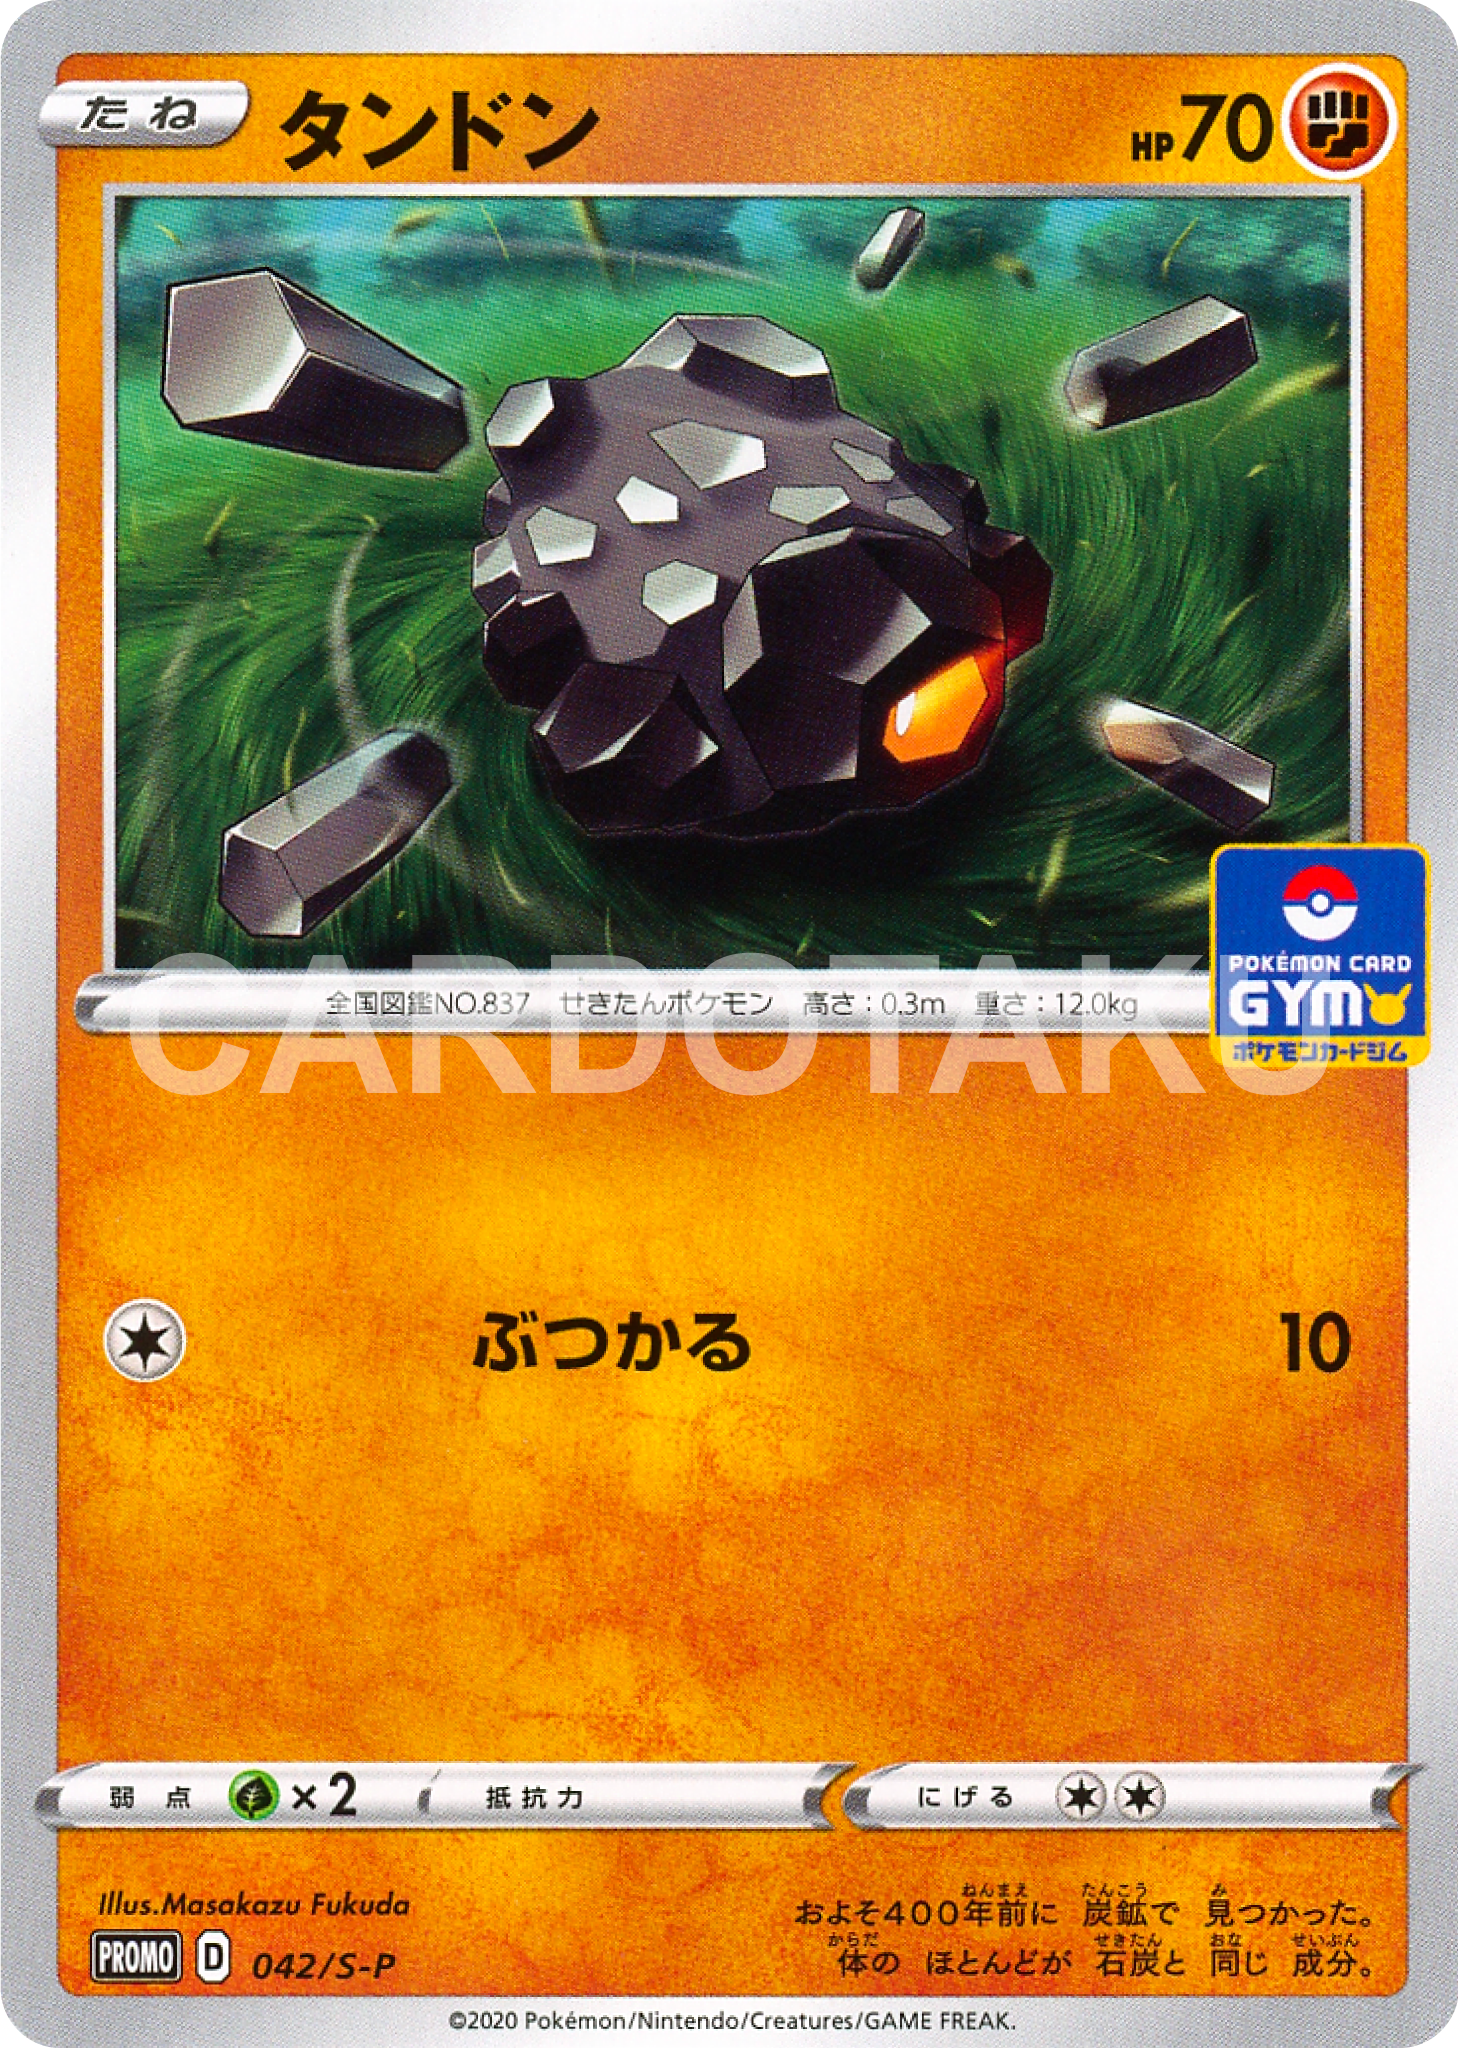 Pokémon Card Game Sword & Shield PROMO 042/S-P POKÉMON CARD GYM promo card pack #2 March 6 2020 Rolycoly